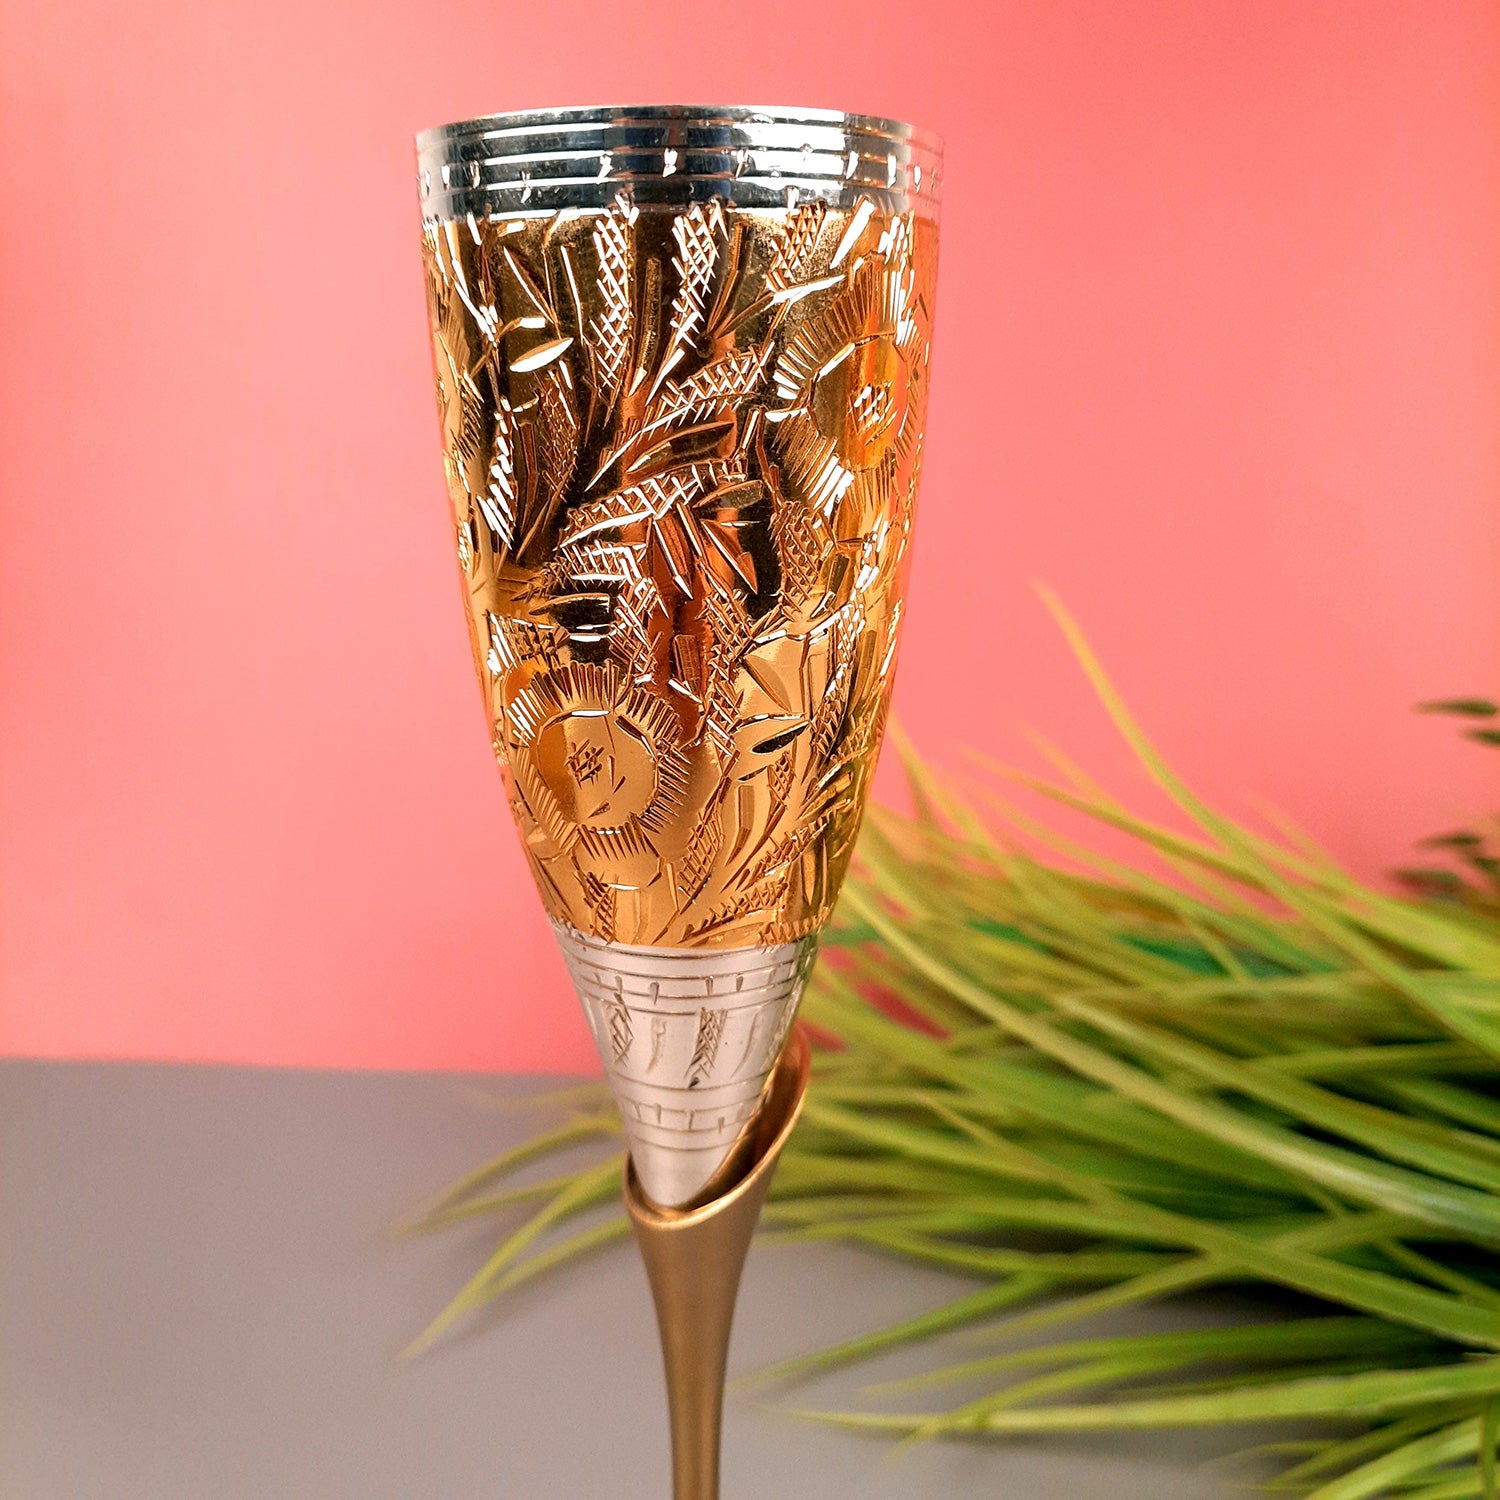 Wine Glasses Set | Champagne Glass - Gold Coated Steel Unbreakable - For Dining Table, Home Decor & Party Serveware | Gift for Men, Diwali Housewarming & Festival Gift (Set of 2) - Apkamart